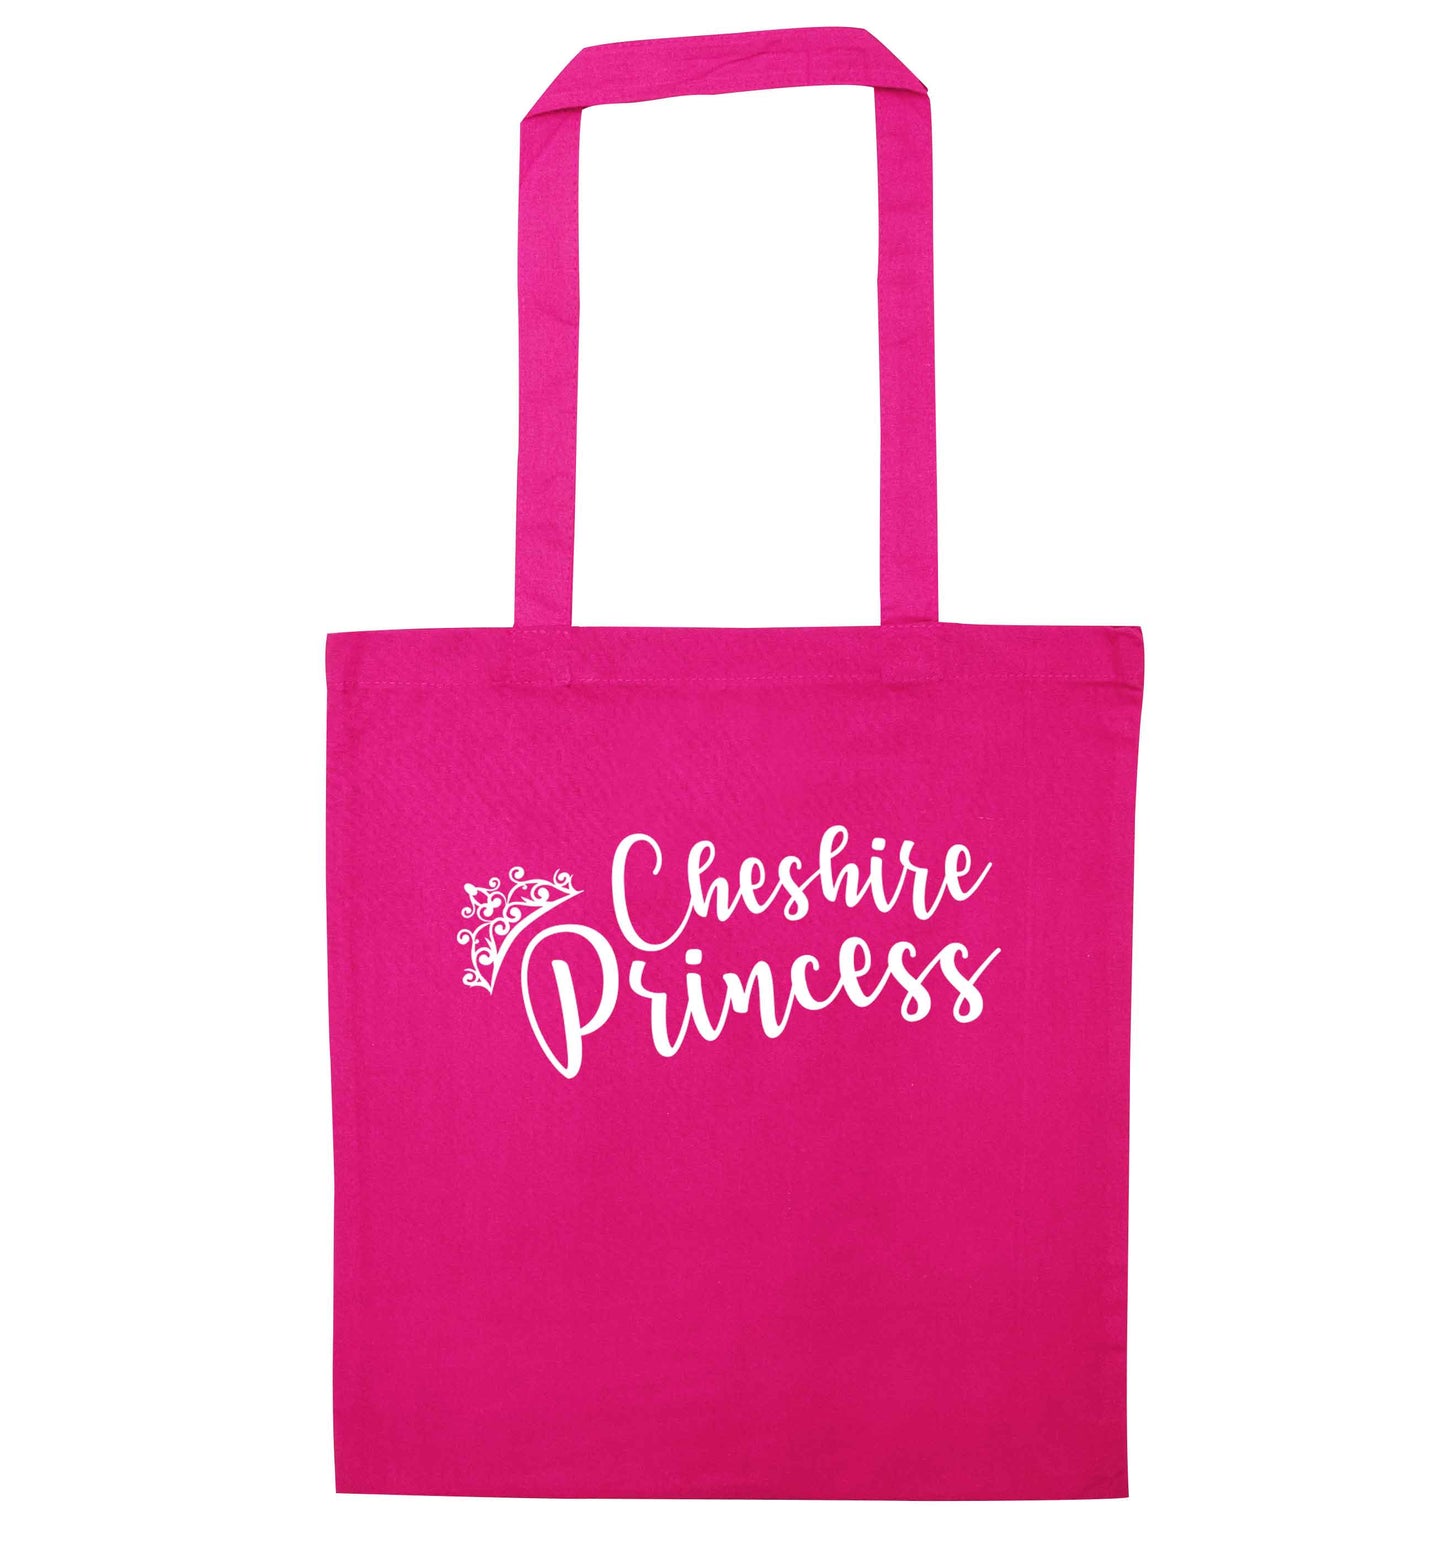 Cheshire princess pink tote bag